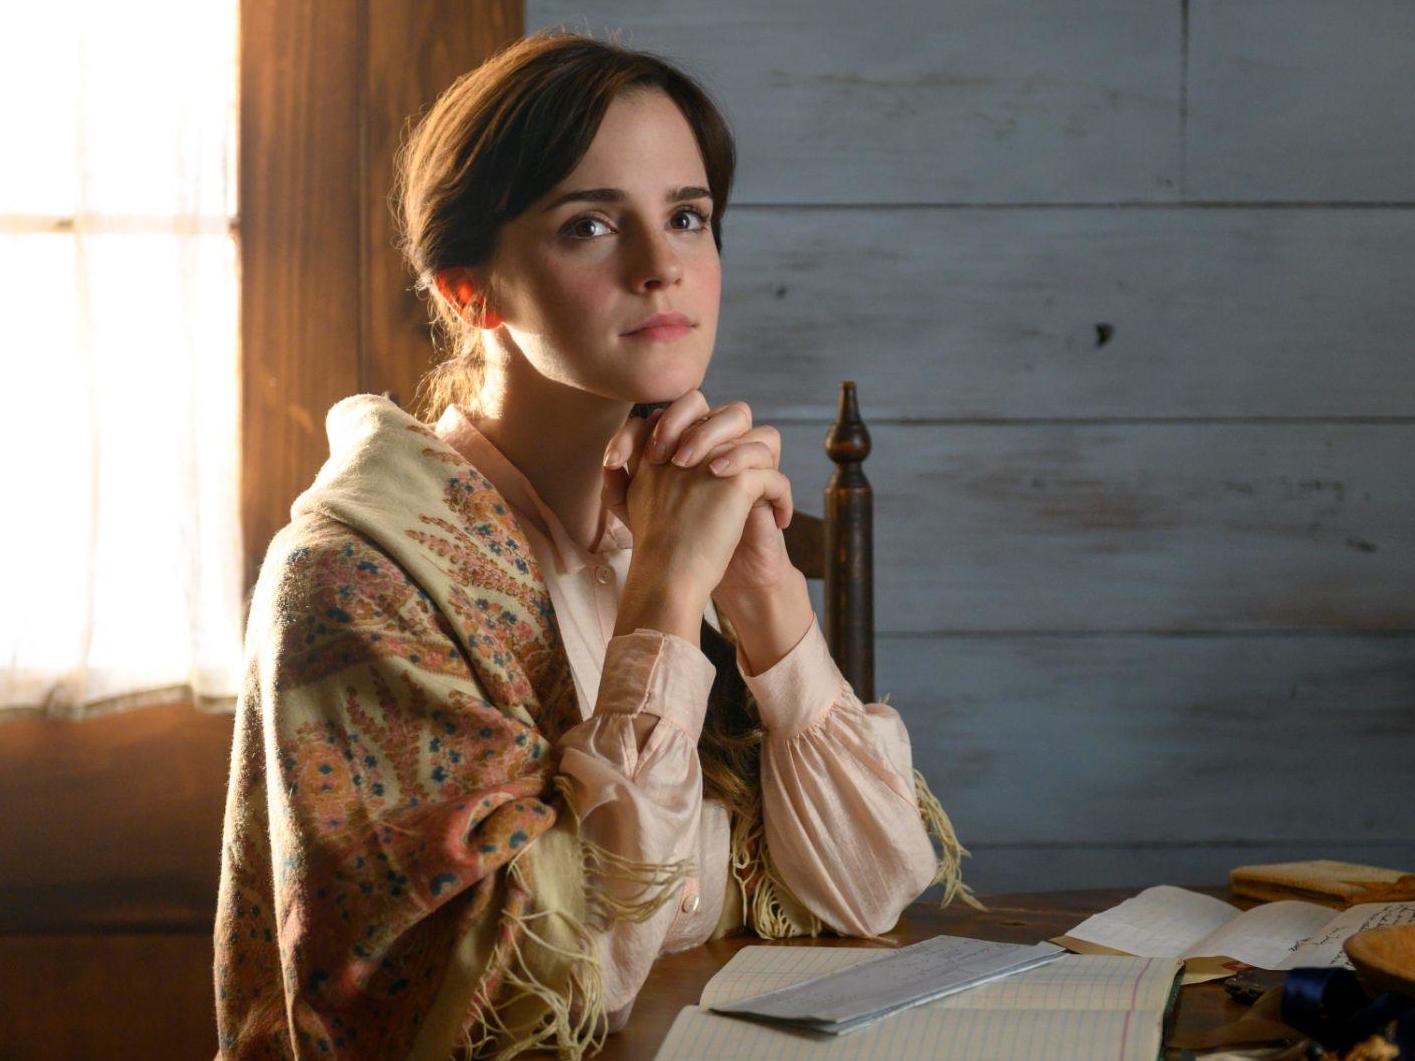 Emma Watson is a brilliant actor